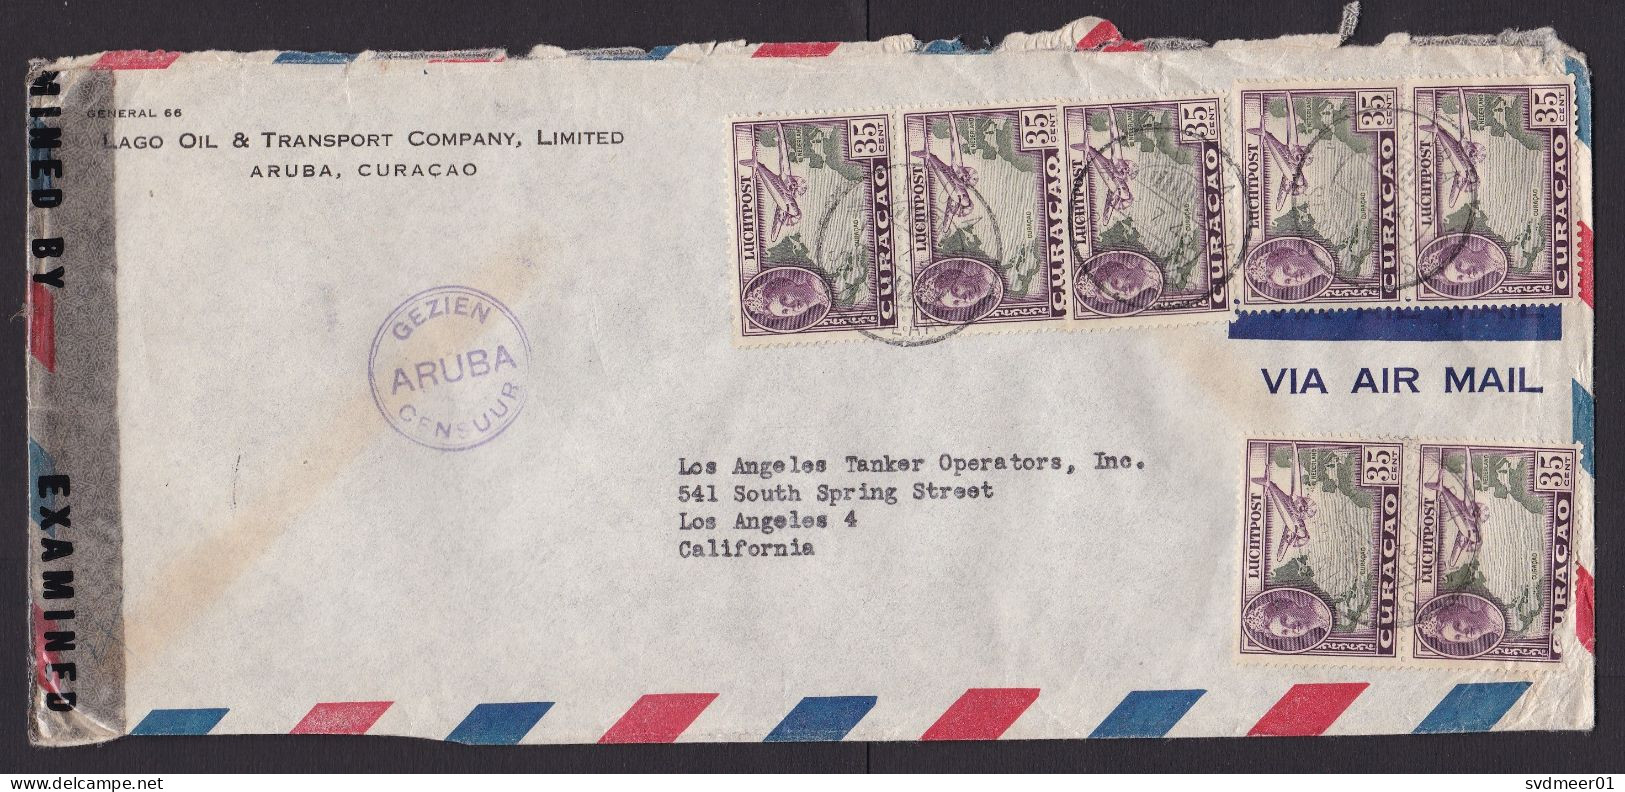 Curacao: Airmail Cover To USA, 1945, 7 Stamps, Map, 2x Censored: US Censor Tape, Aruba Cancel, War, Oil (damaged) - Curaçao, Antilles Neérlandaises, Aruba